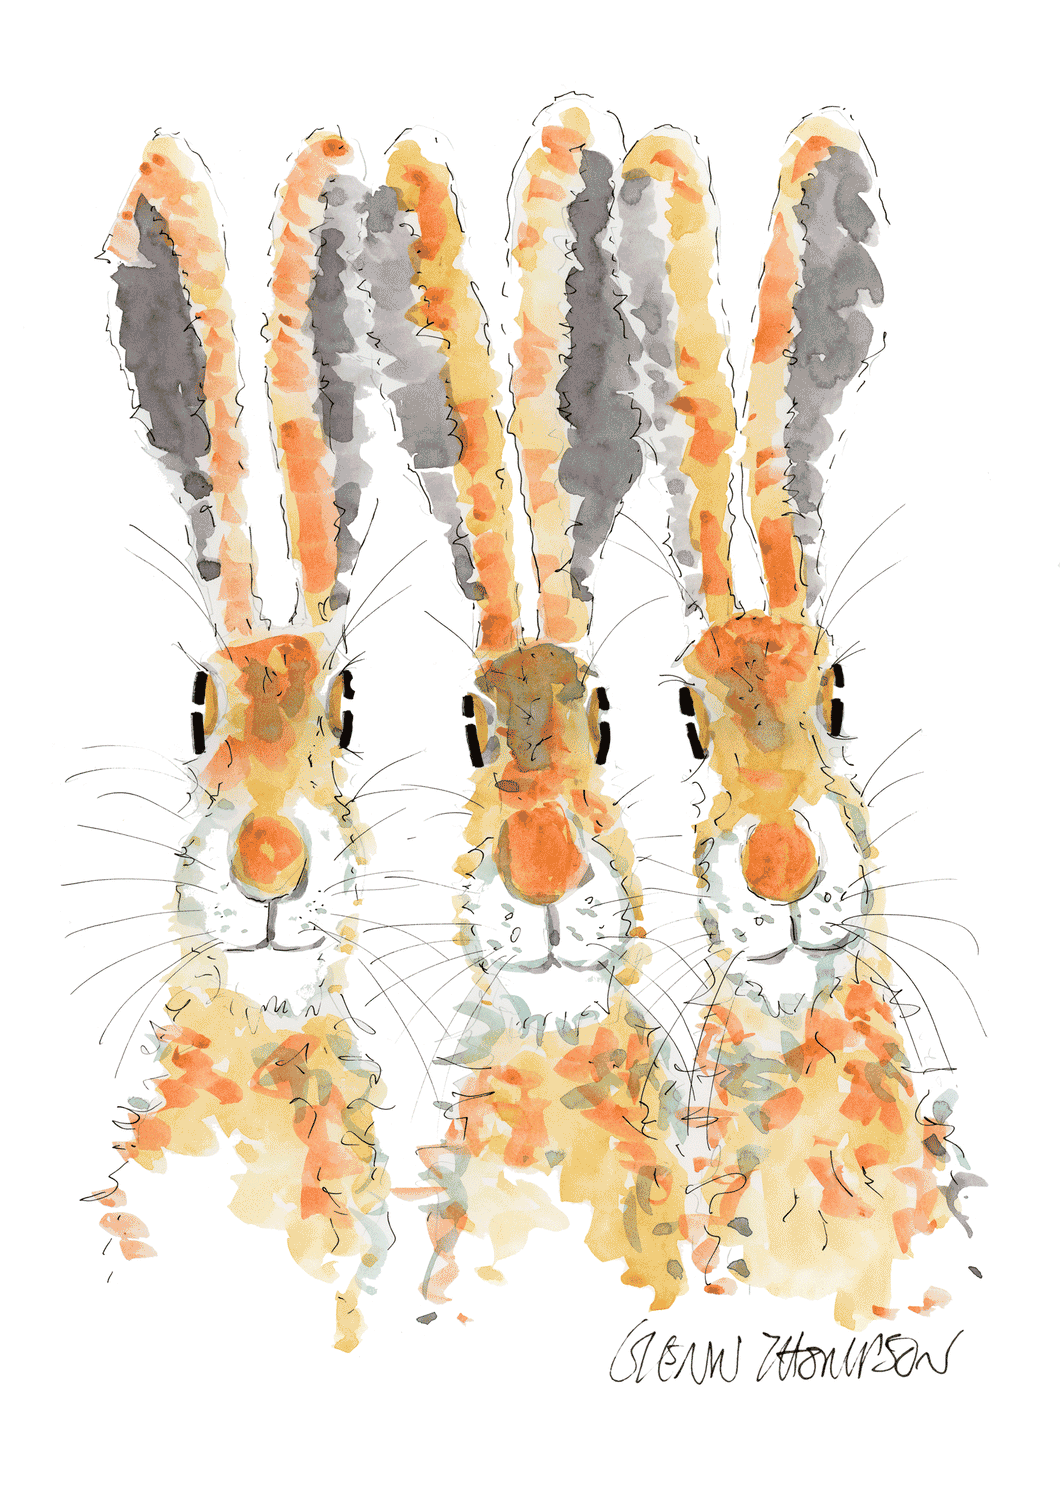 Three hares a Glenn Thompson Print